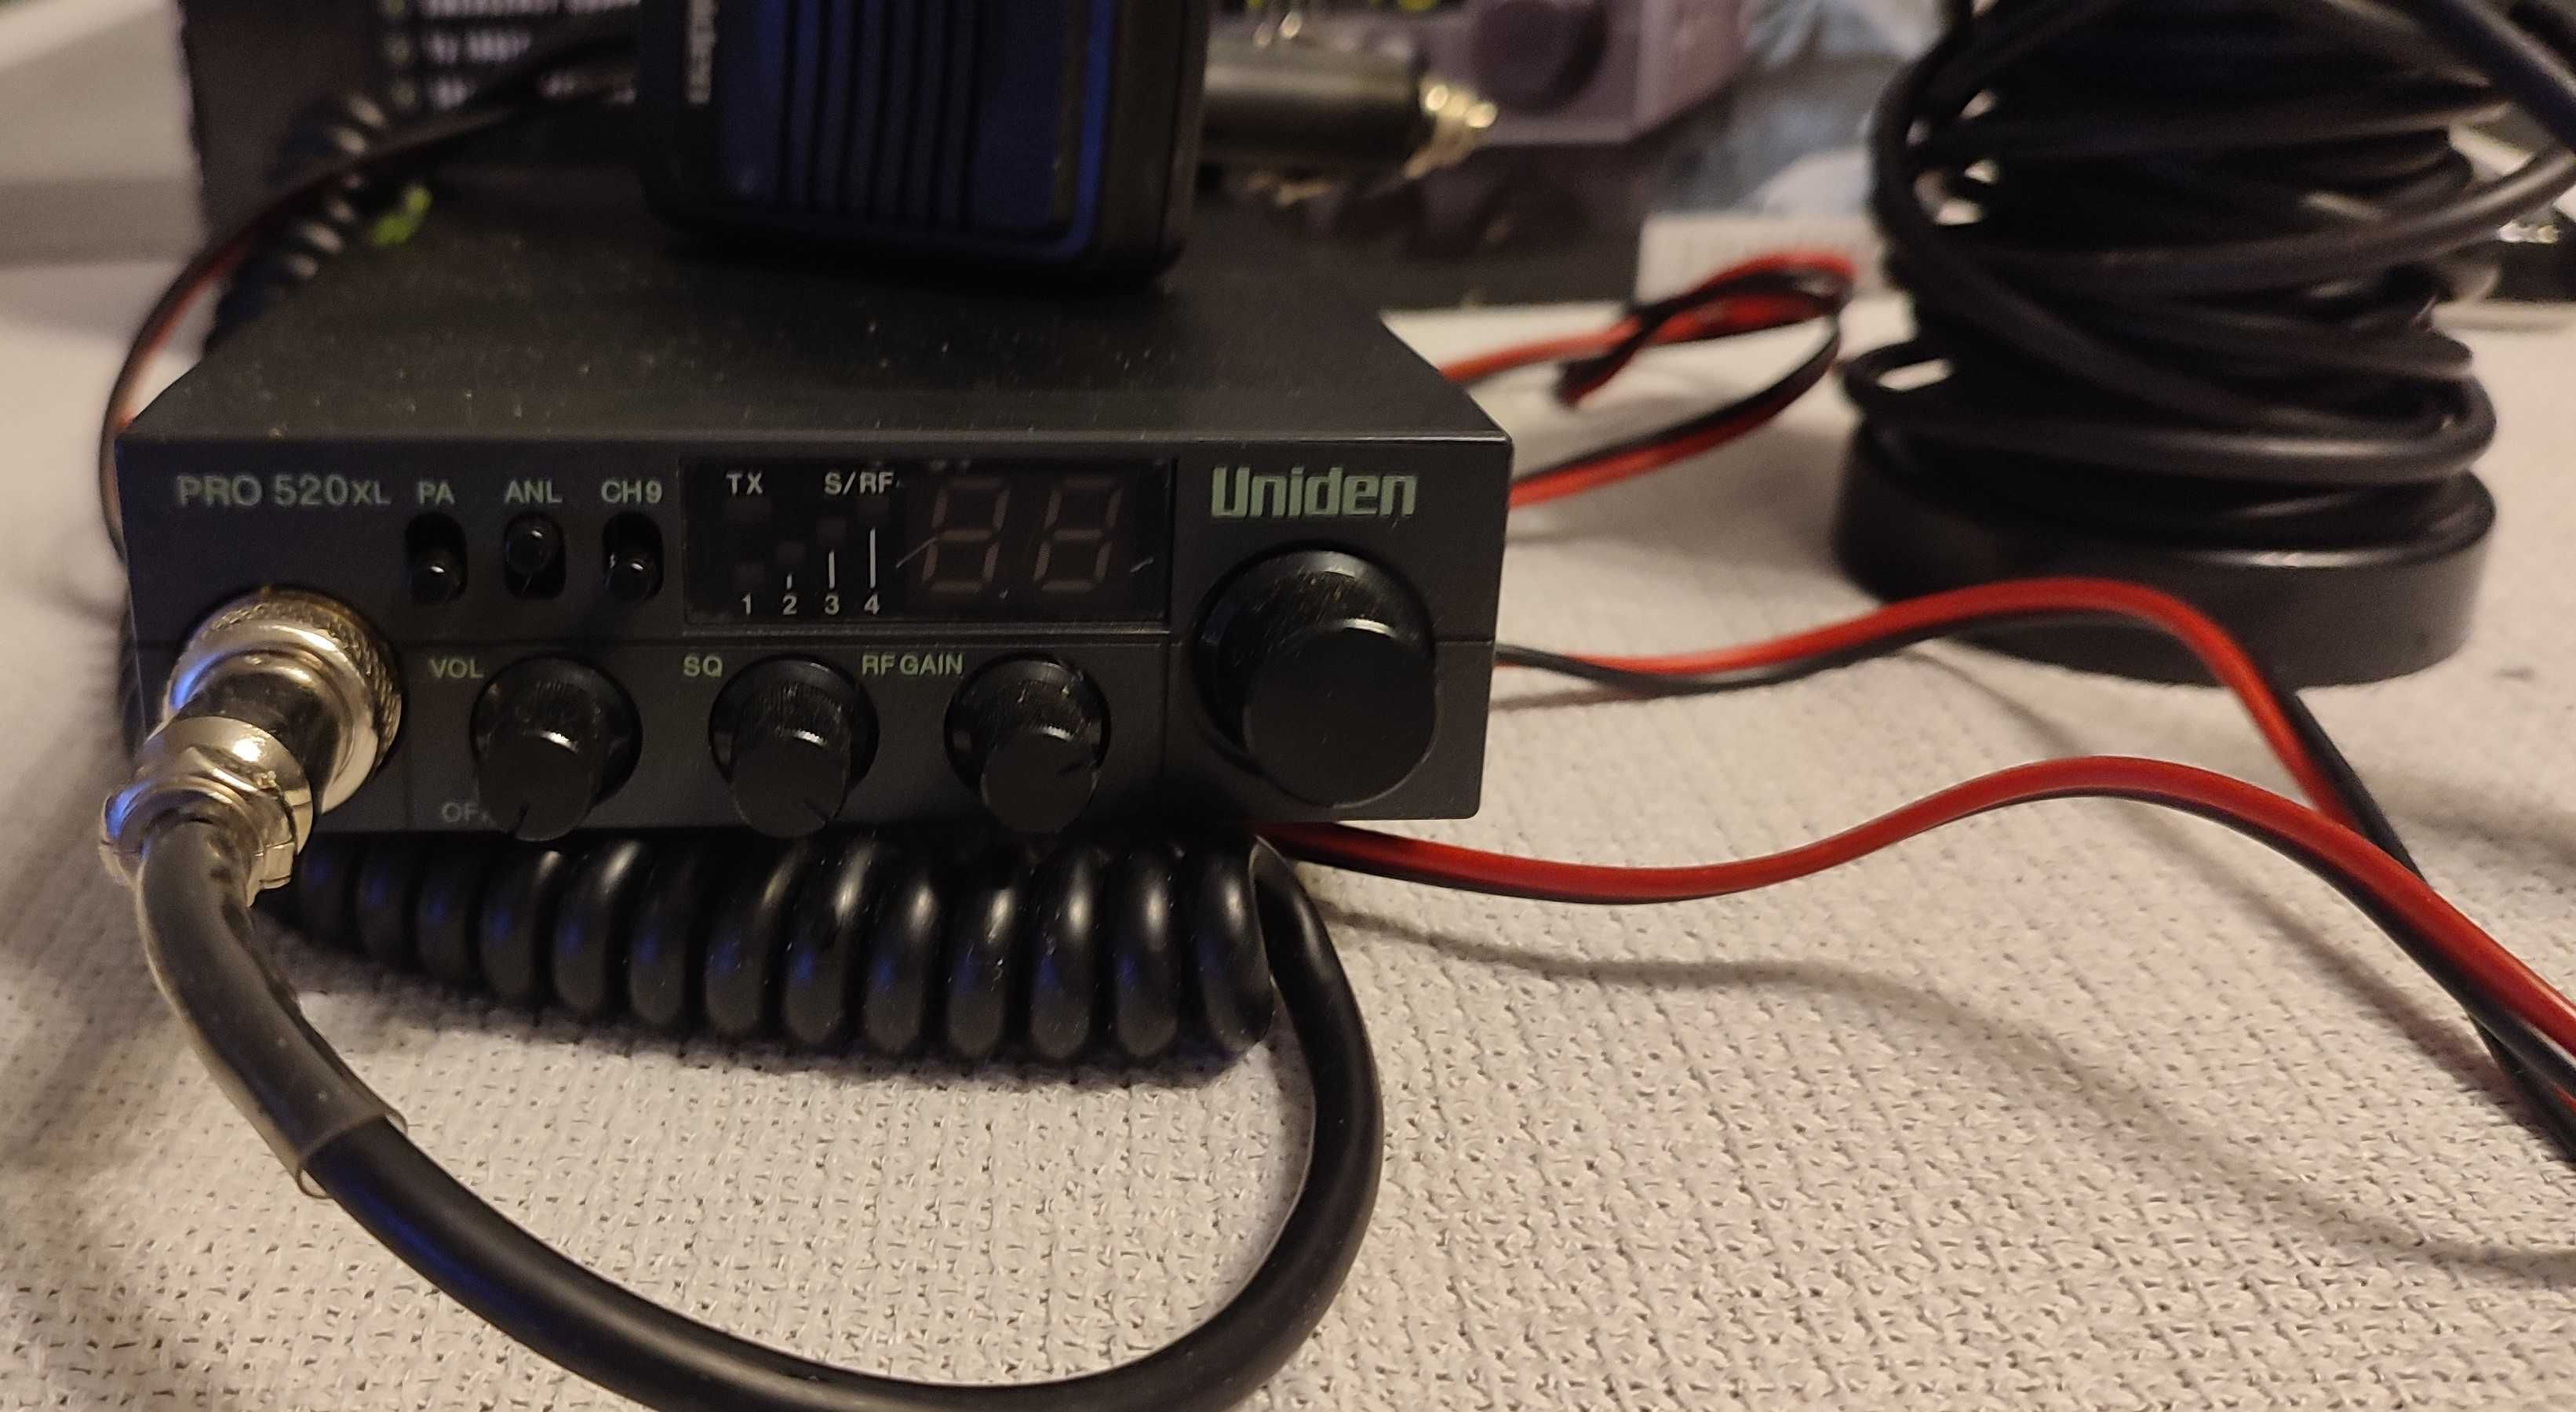 Uniden pro520xl cb radio z osprzętem